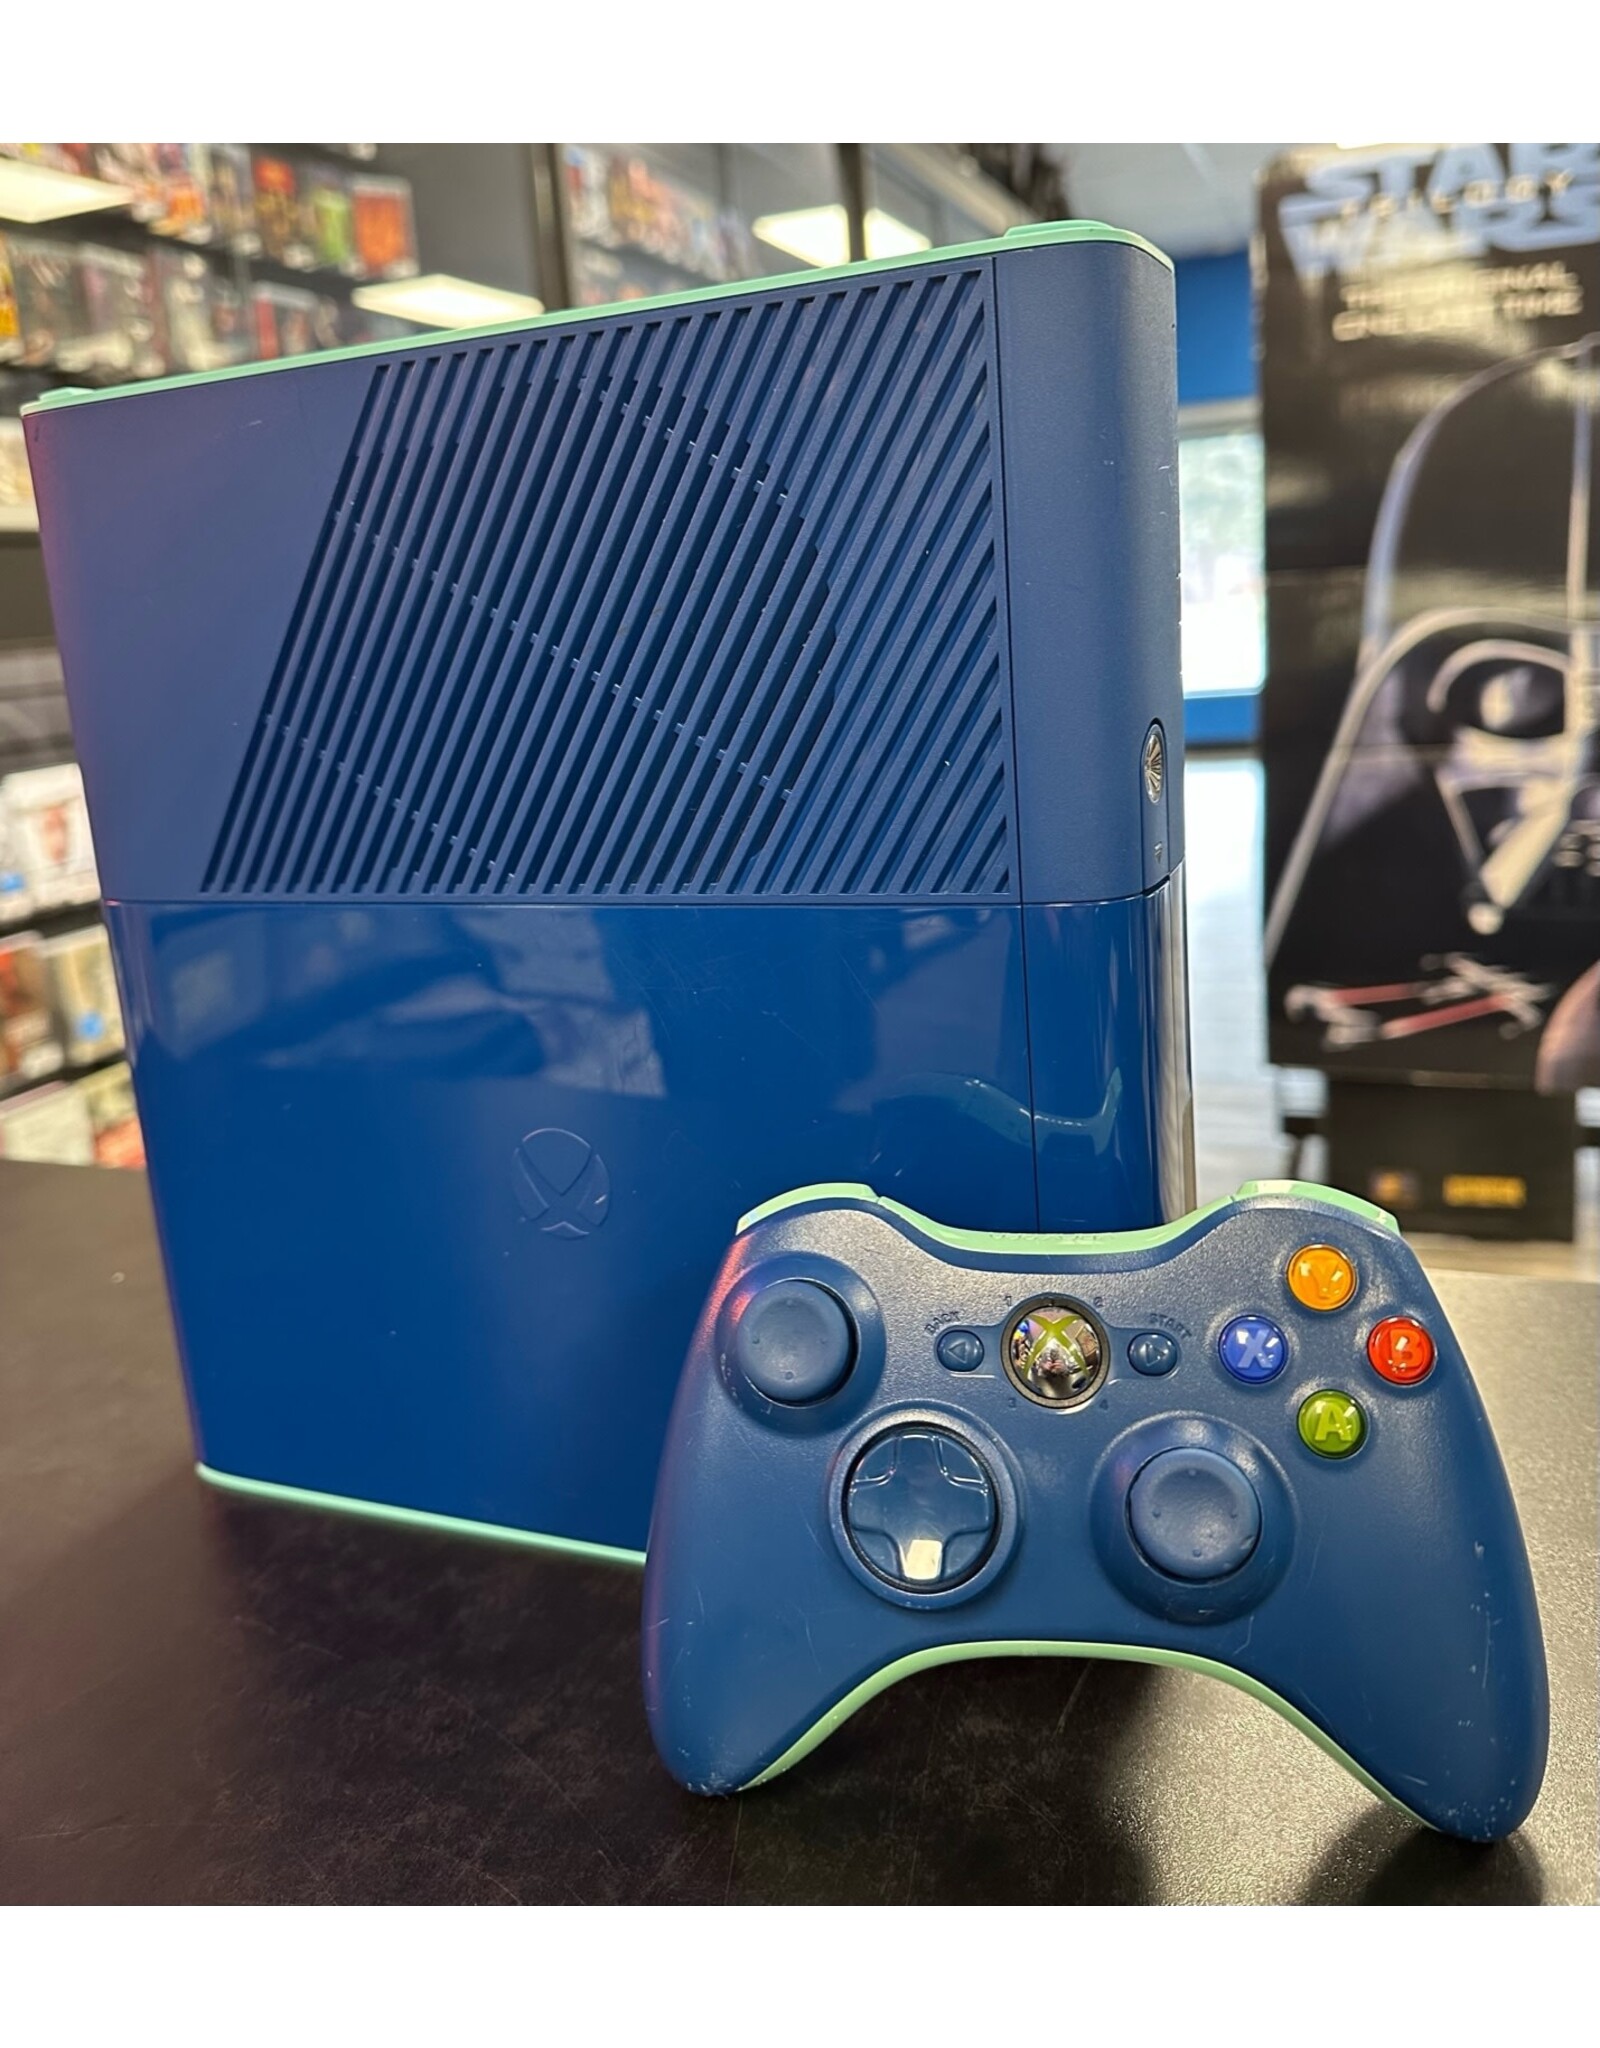 Xbox 360 Xbox 360 E Console 500GB Blue Call of Duty Edition (Used, Cosmetic Damage)